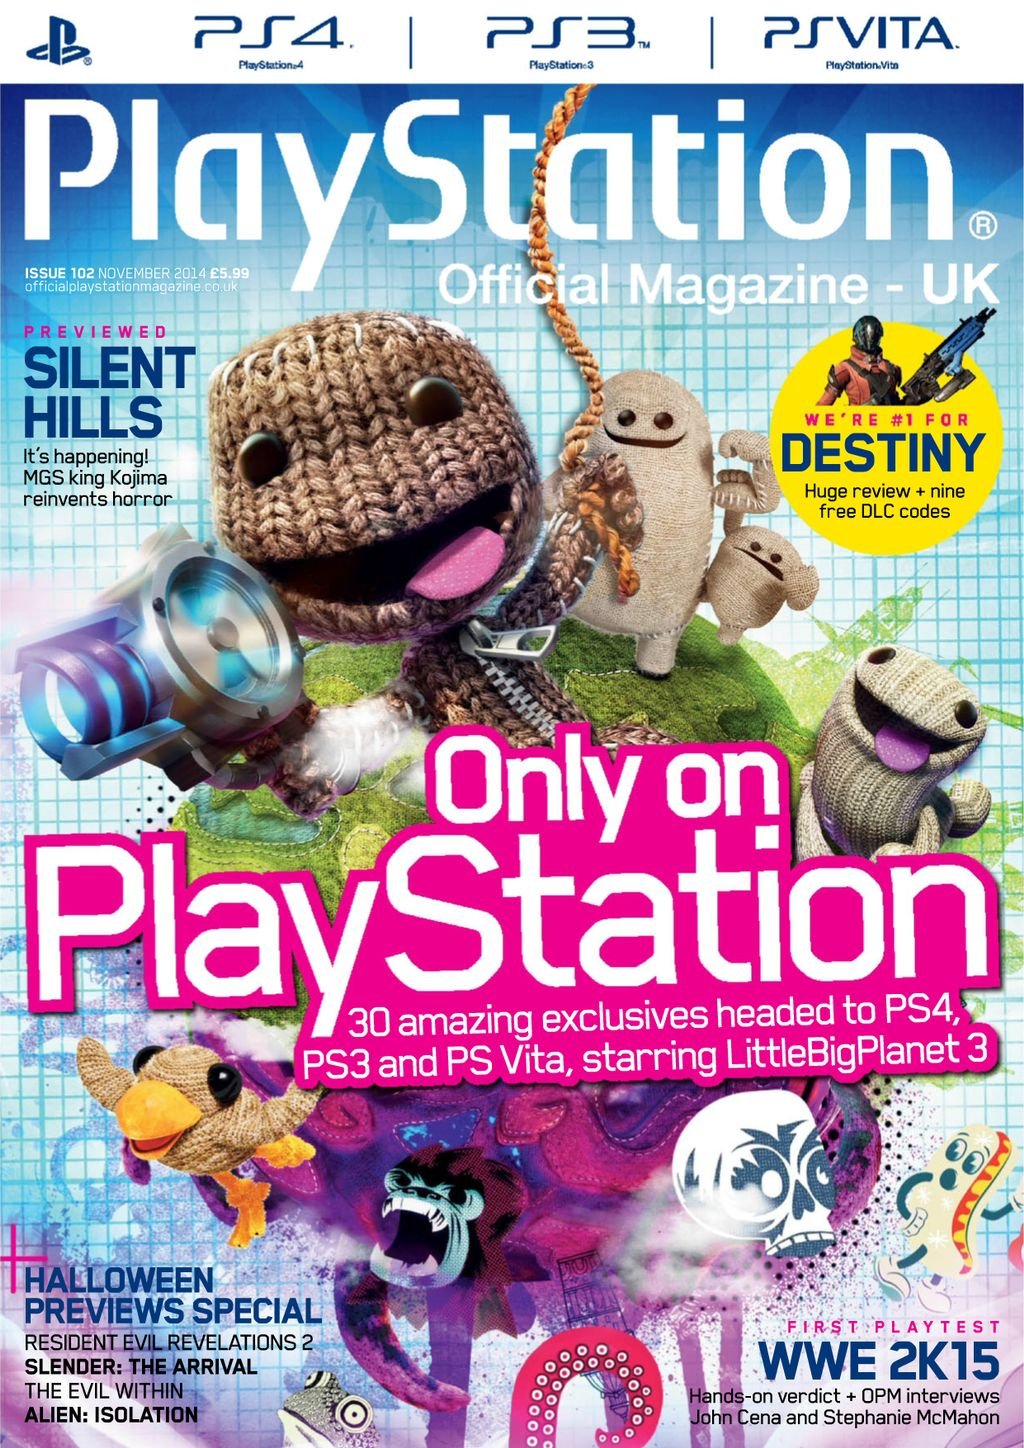 Playstation Official Magazine UK 102 (November 2014)